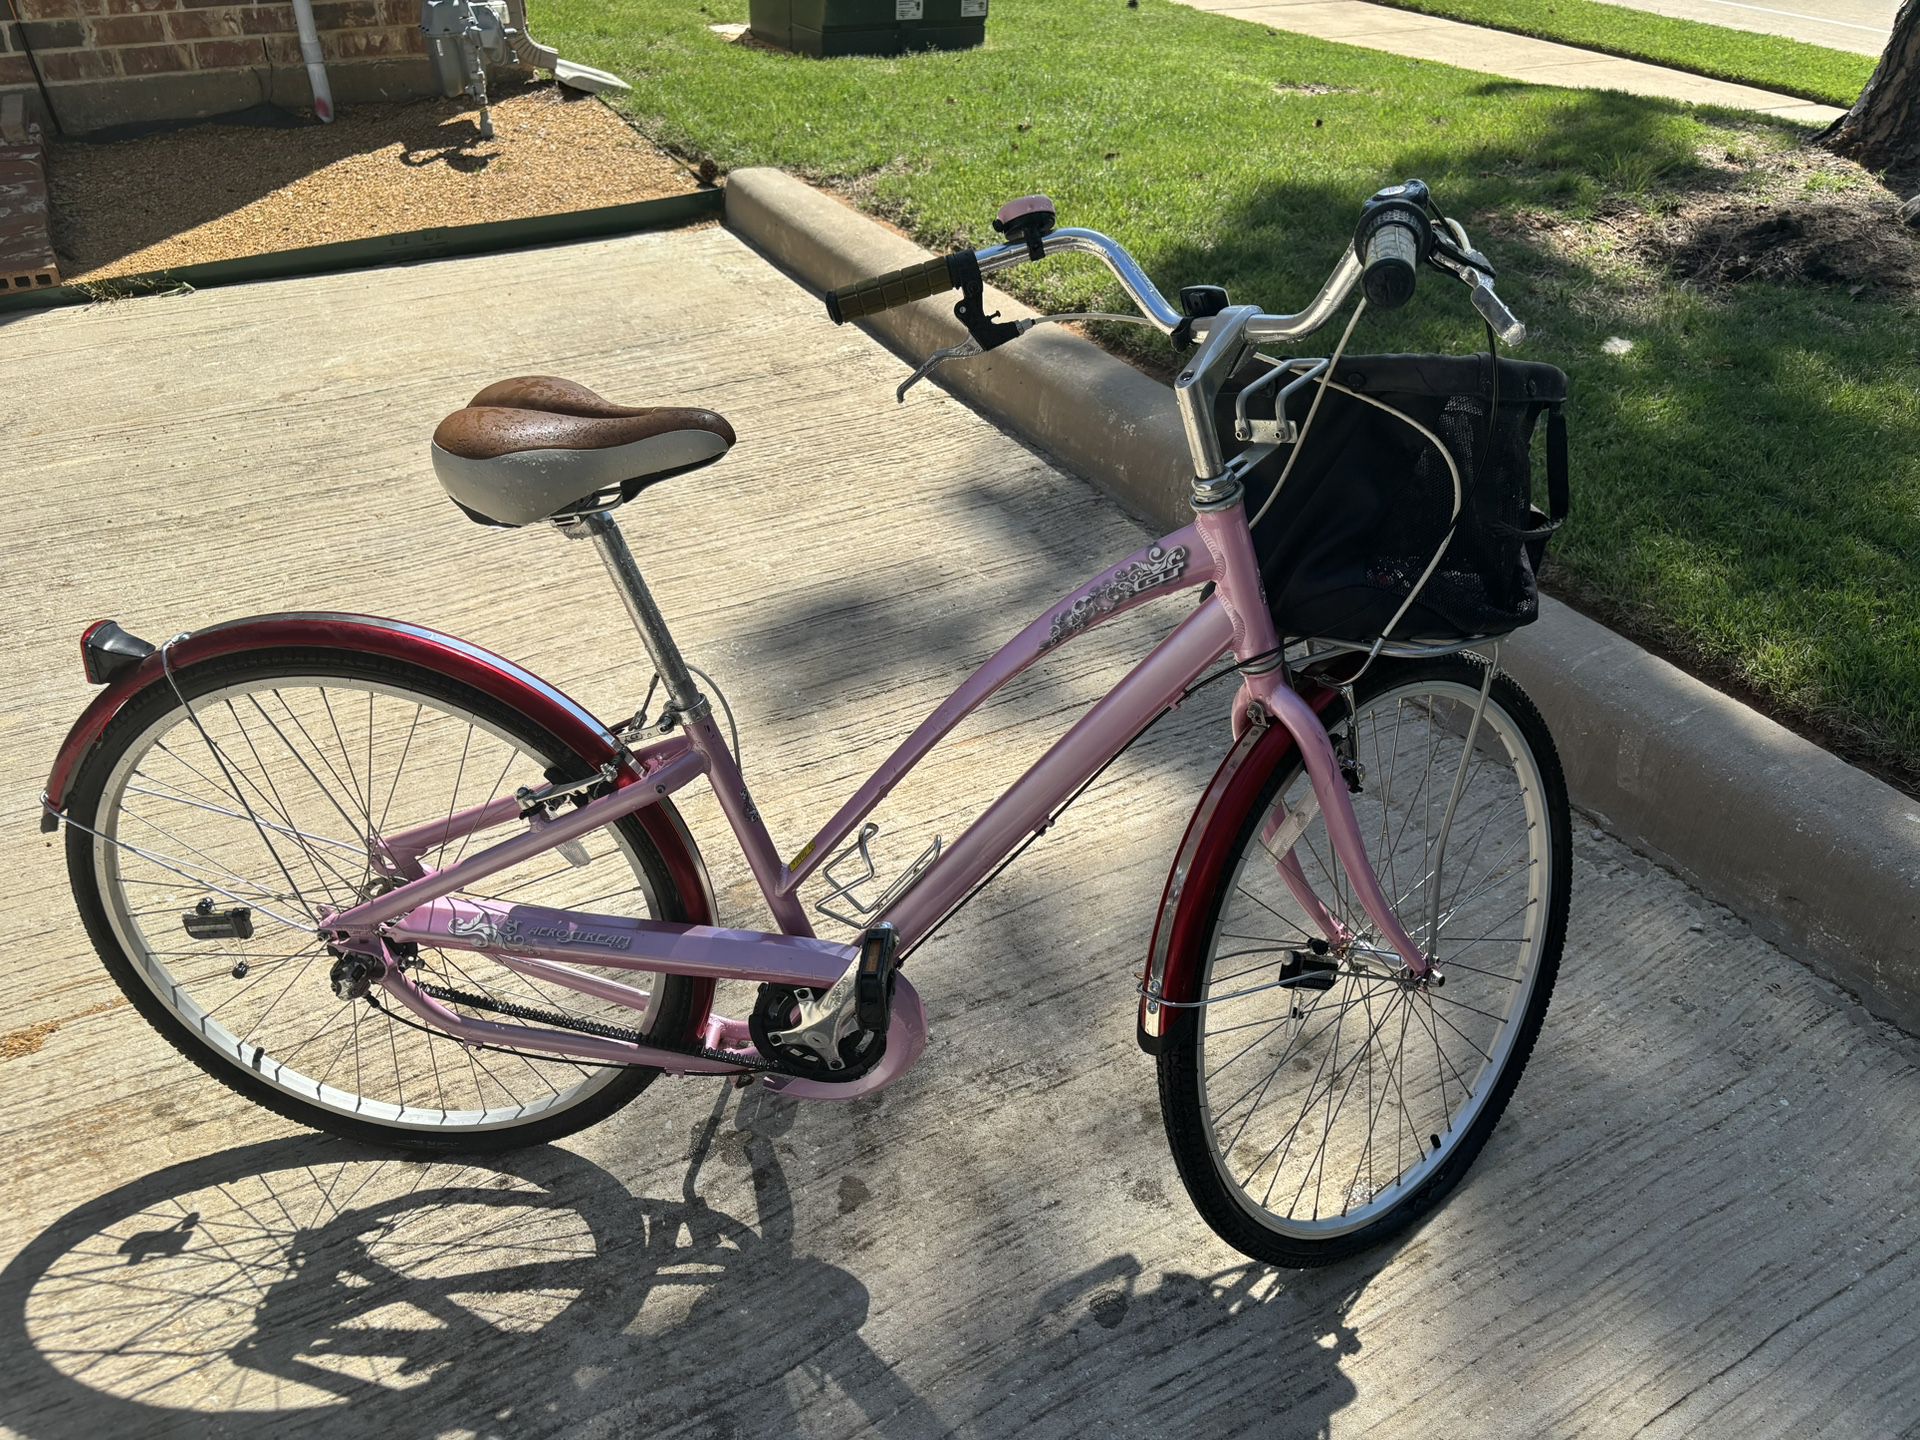 Pink Cruiser Bike